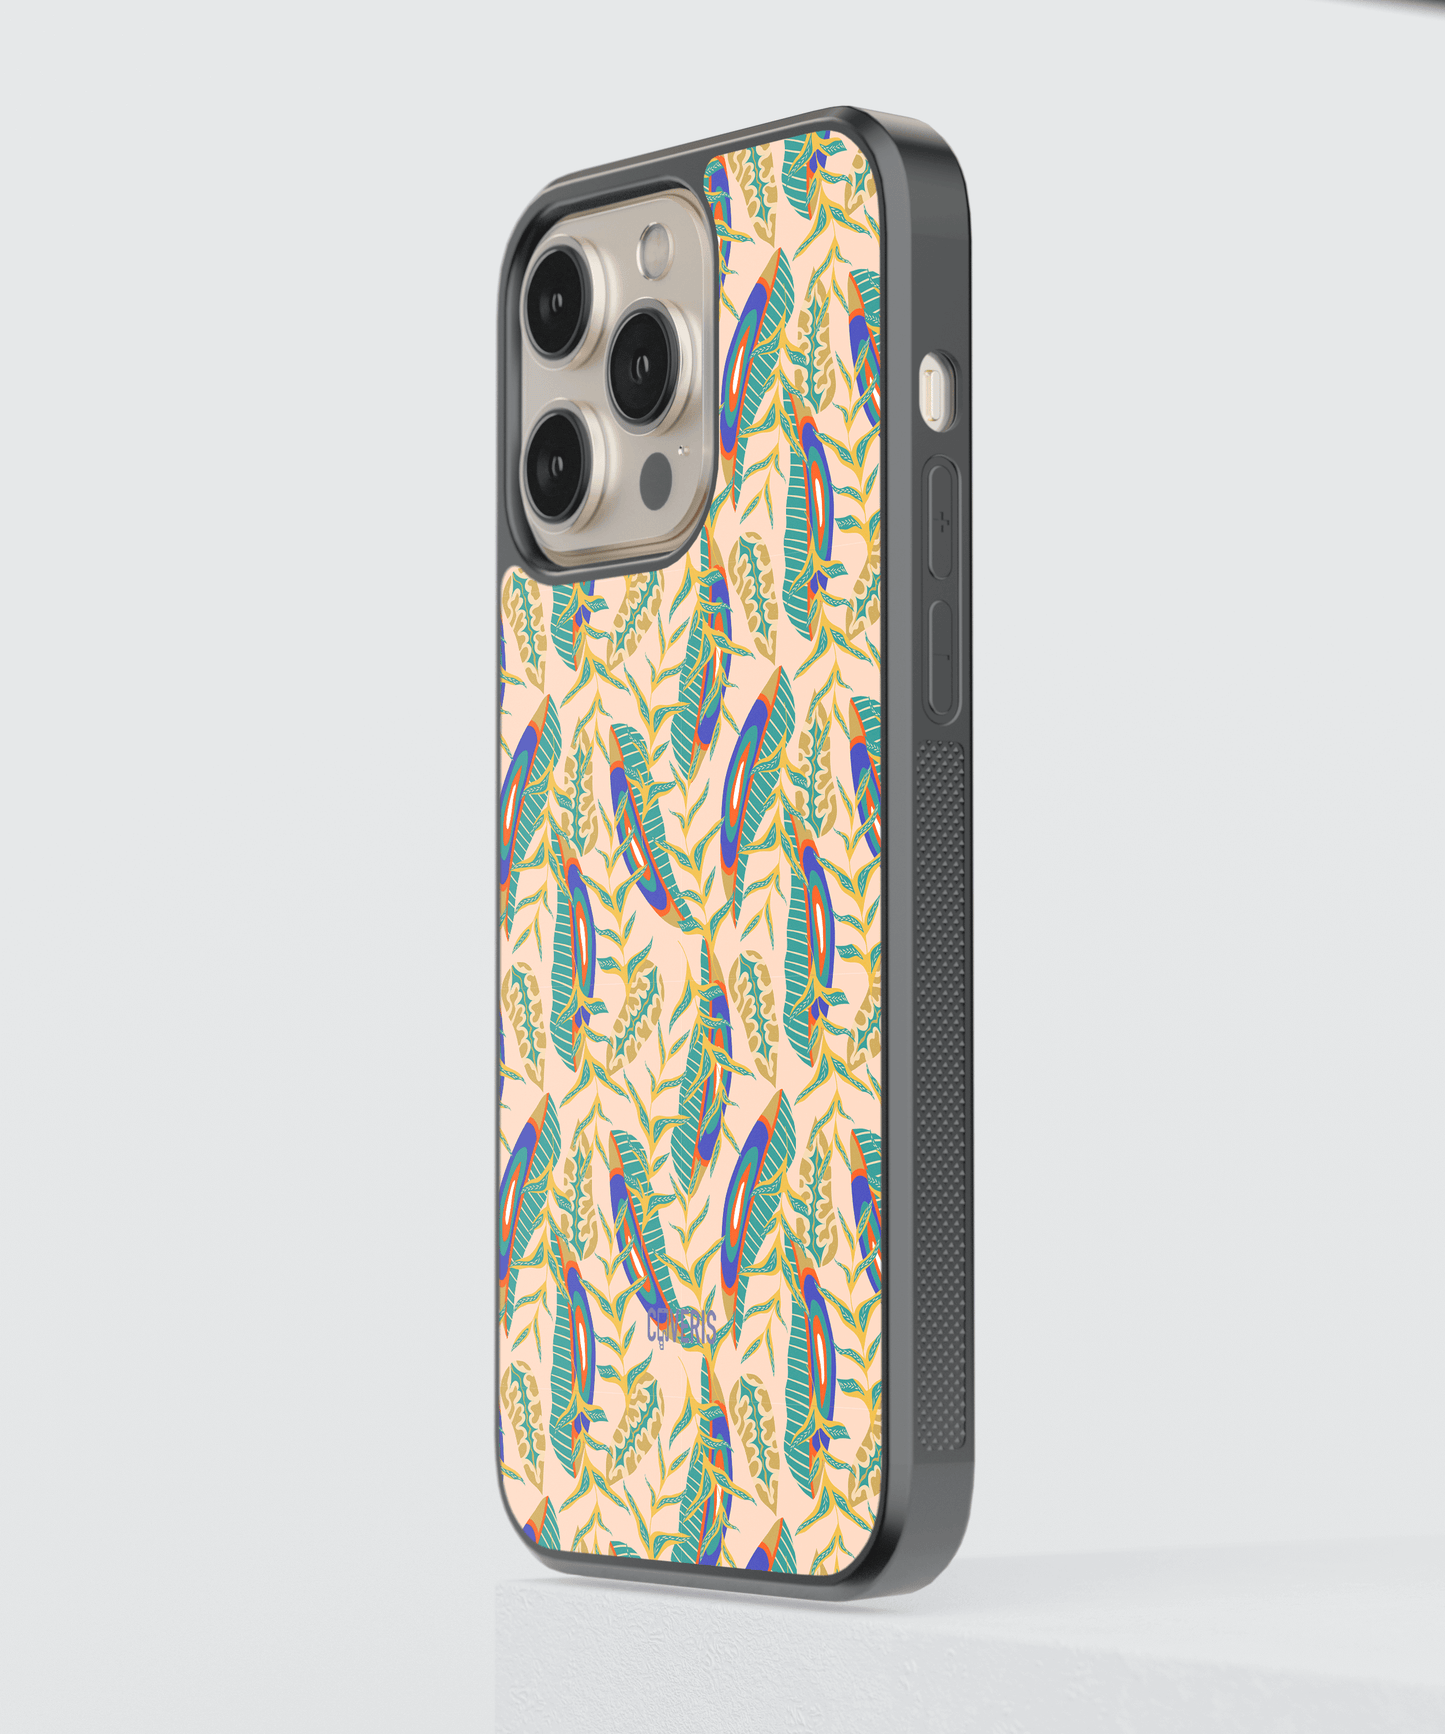 Breezy - iPhone xr phone case